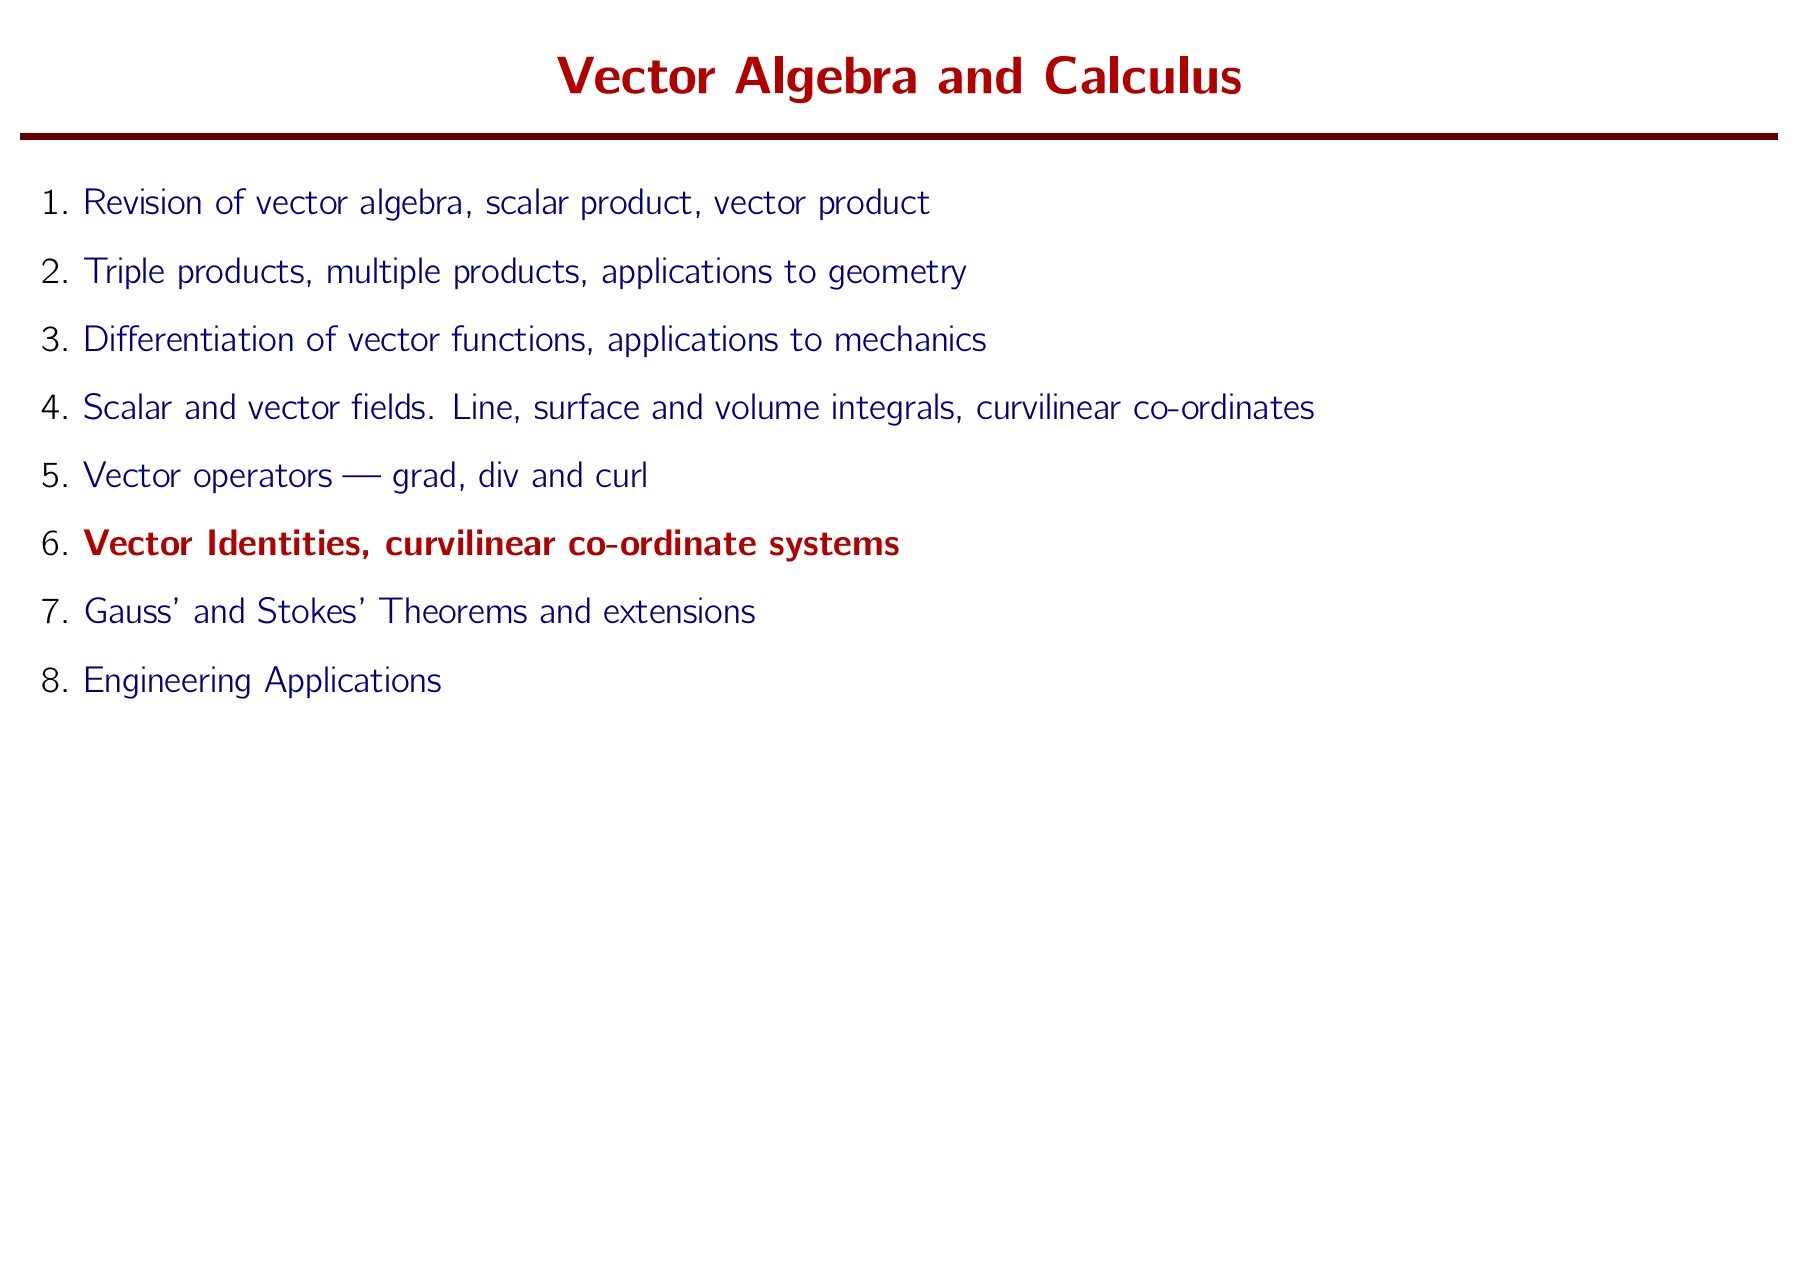 vector calculus identities integration